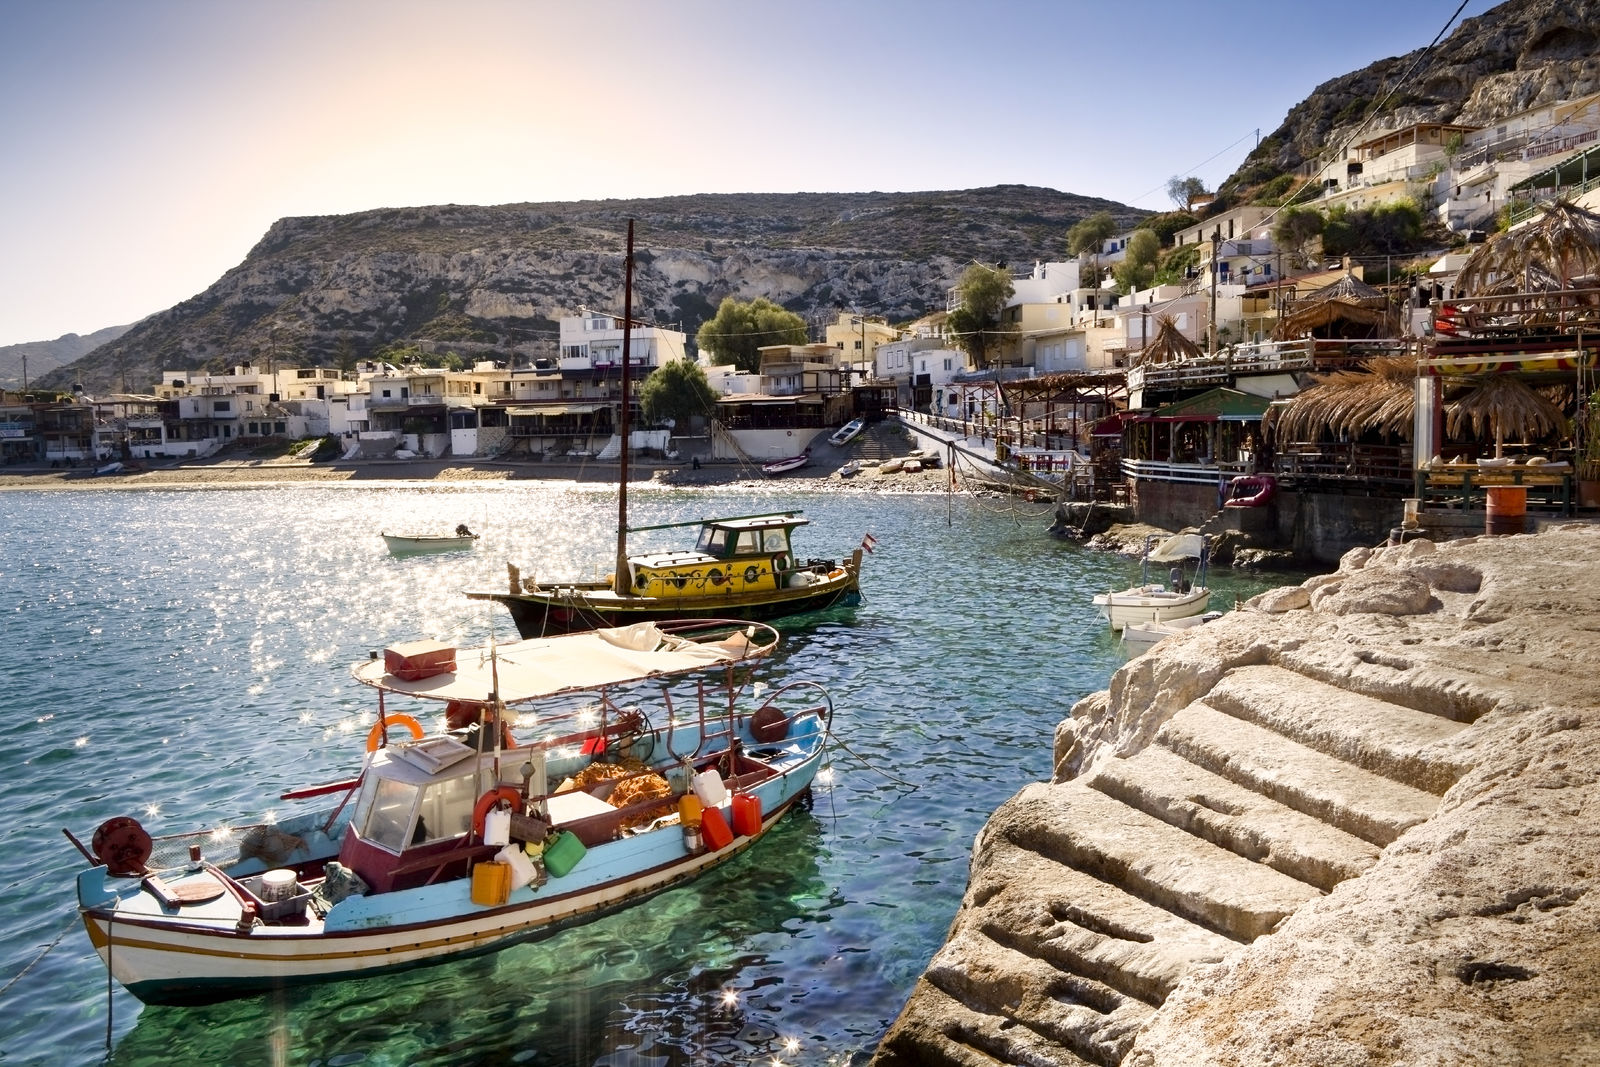 voyage crete juin